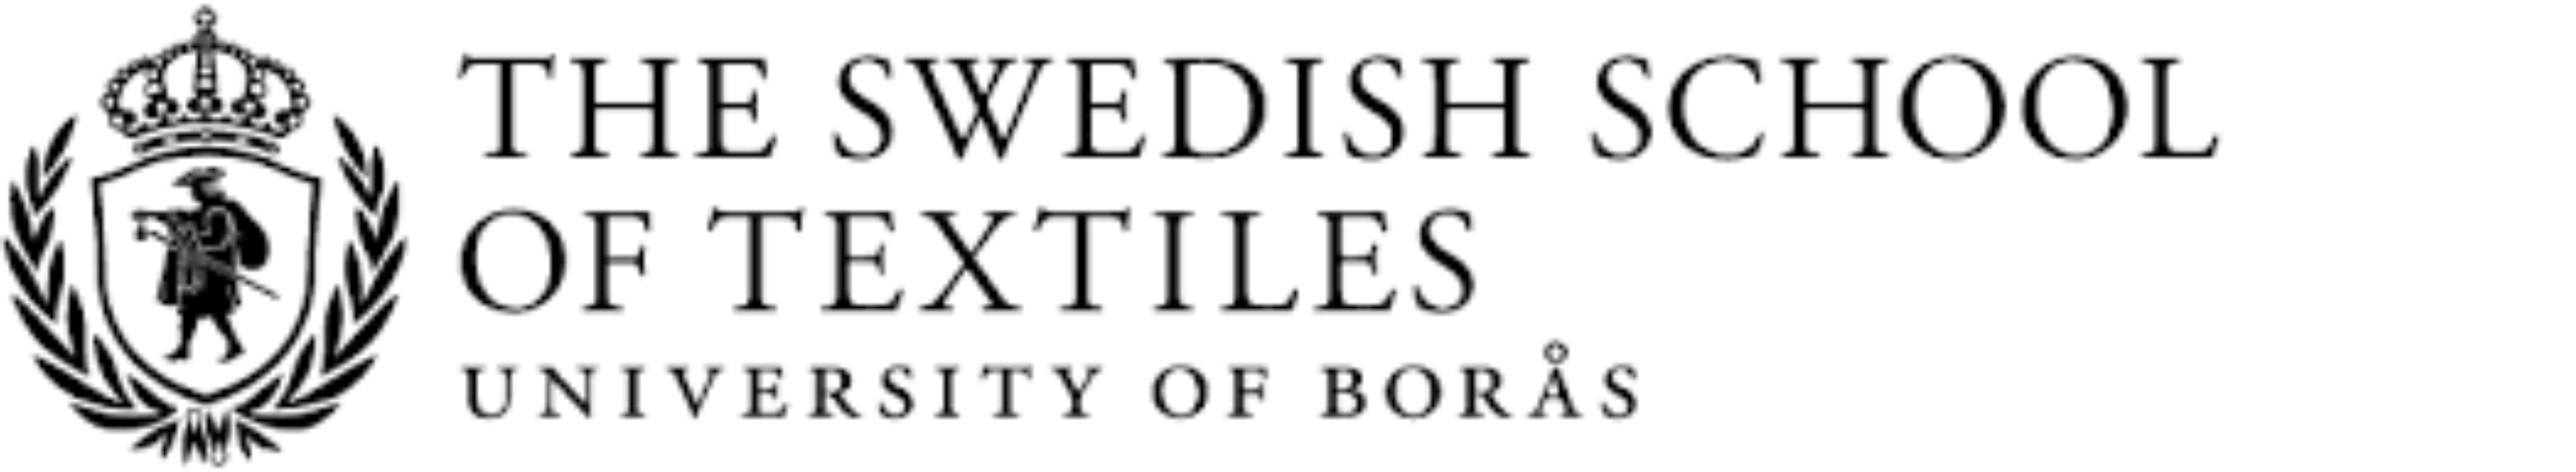 The Swedish School of Textiles, University of Borås 